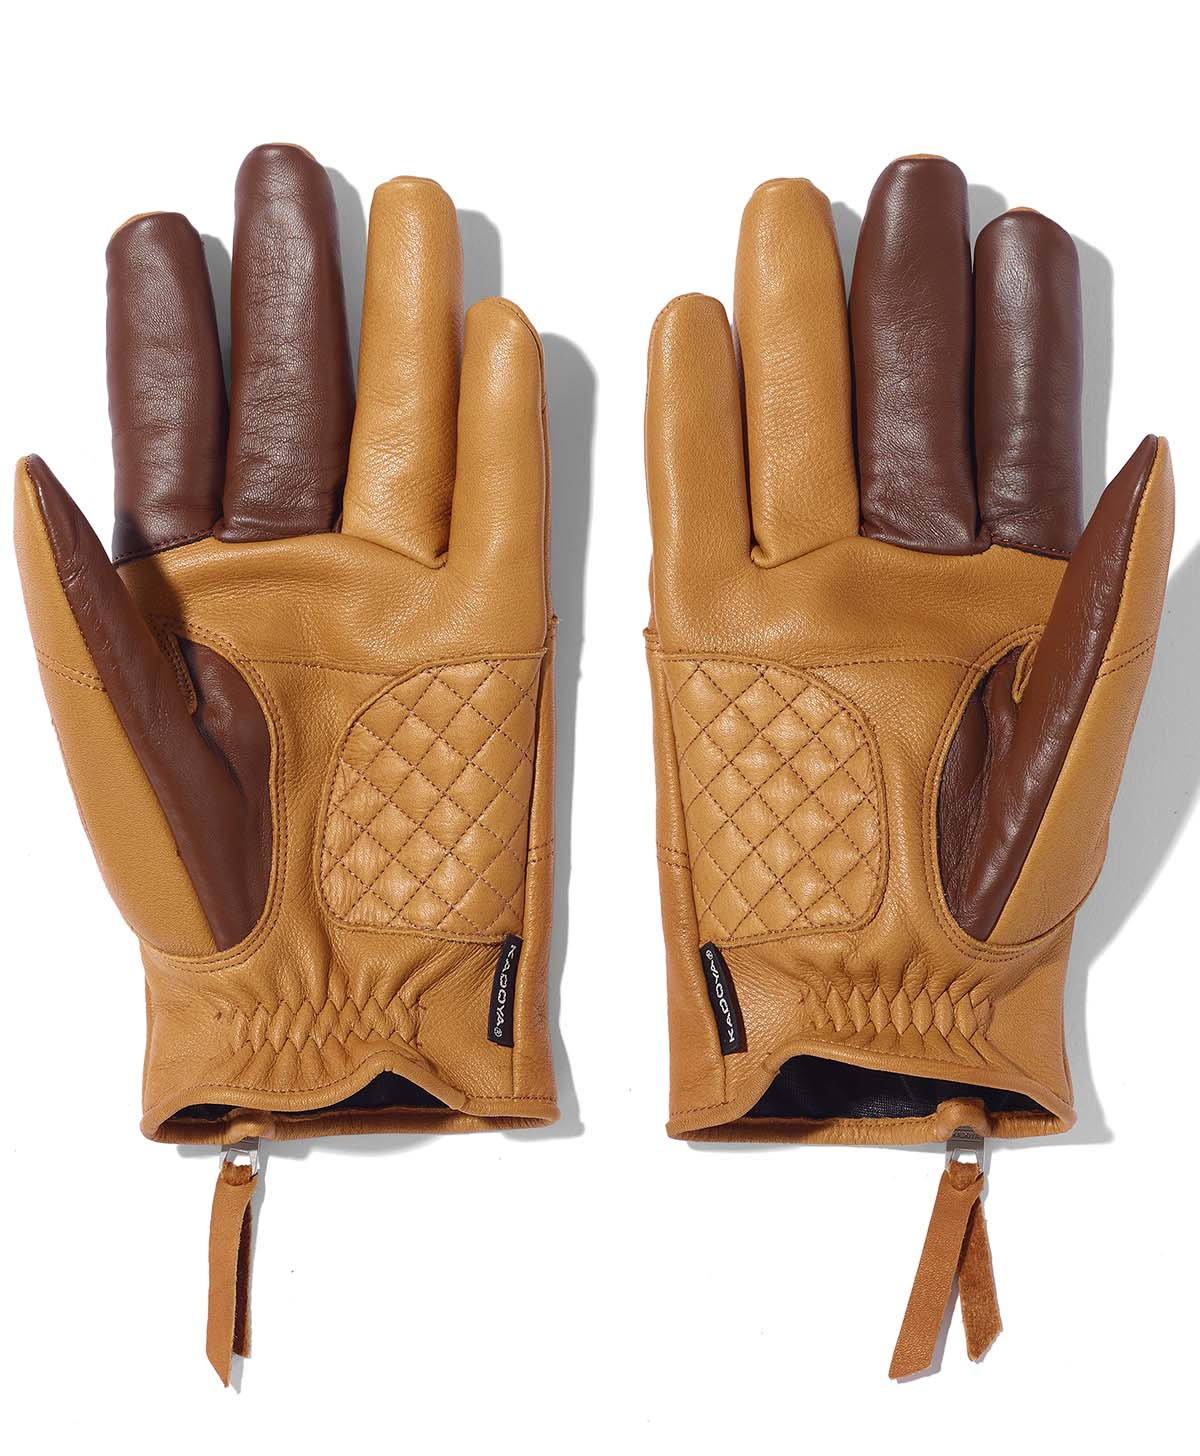 Rox Glove / Brown